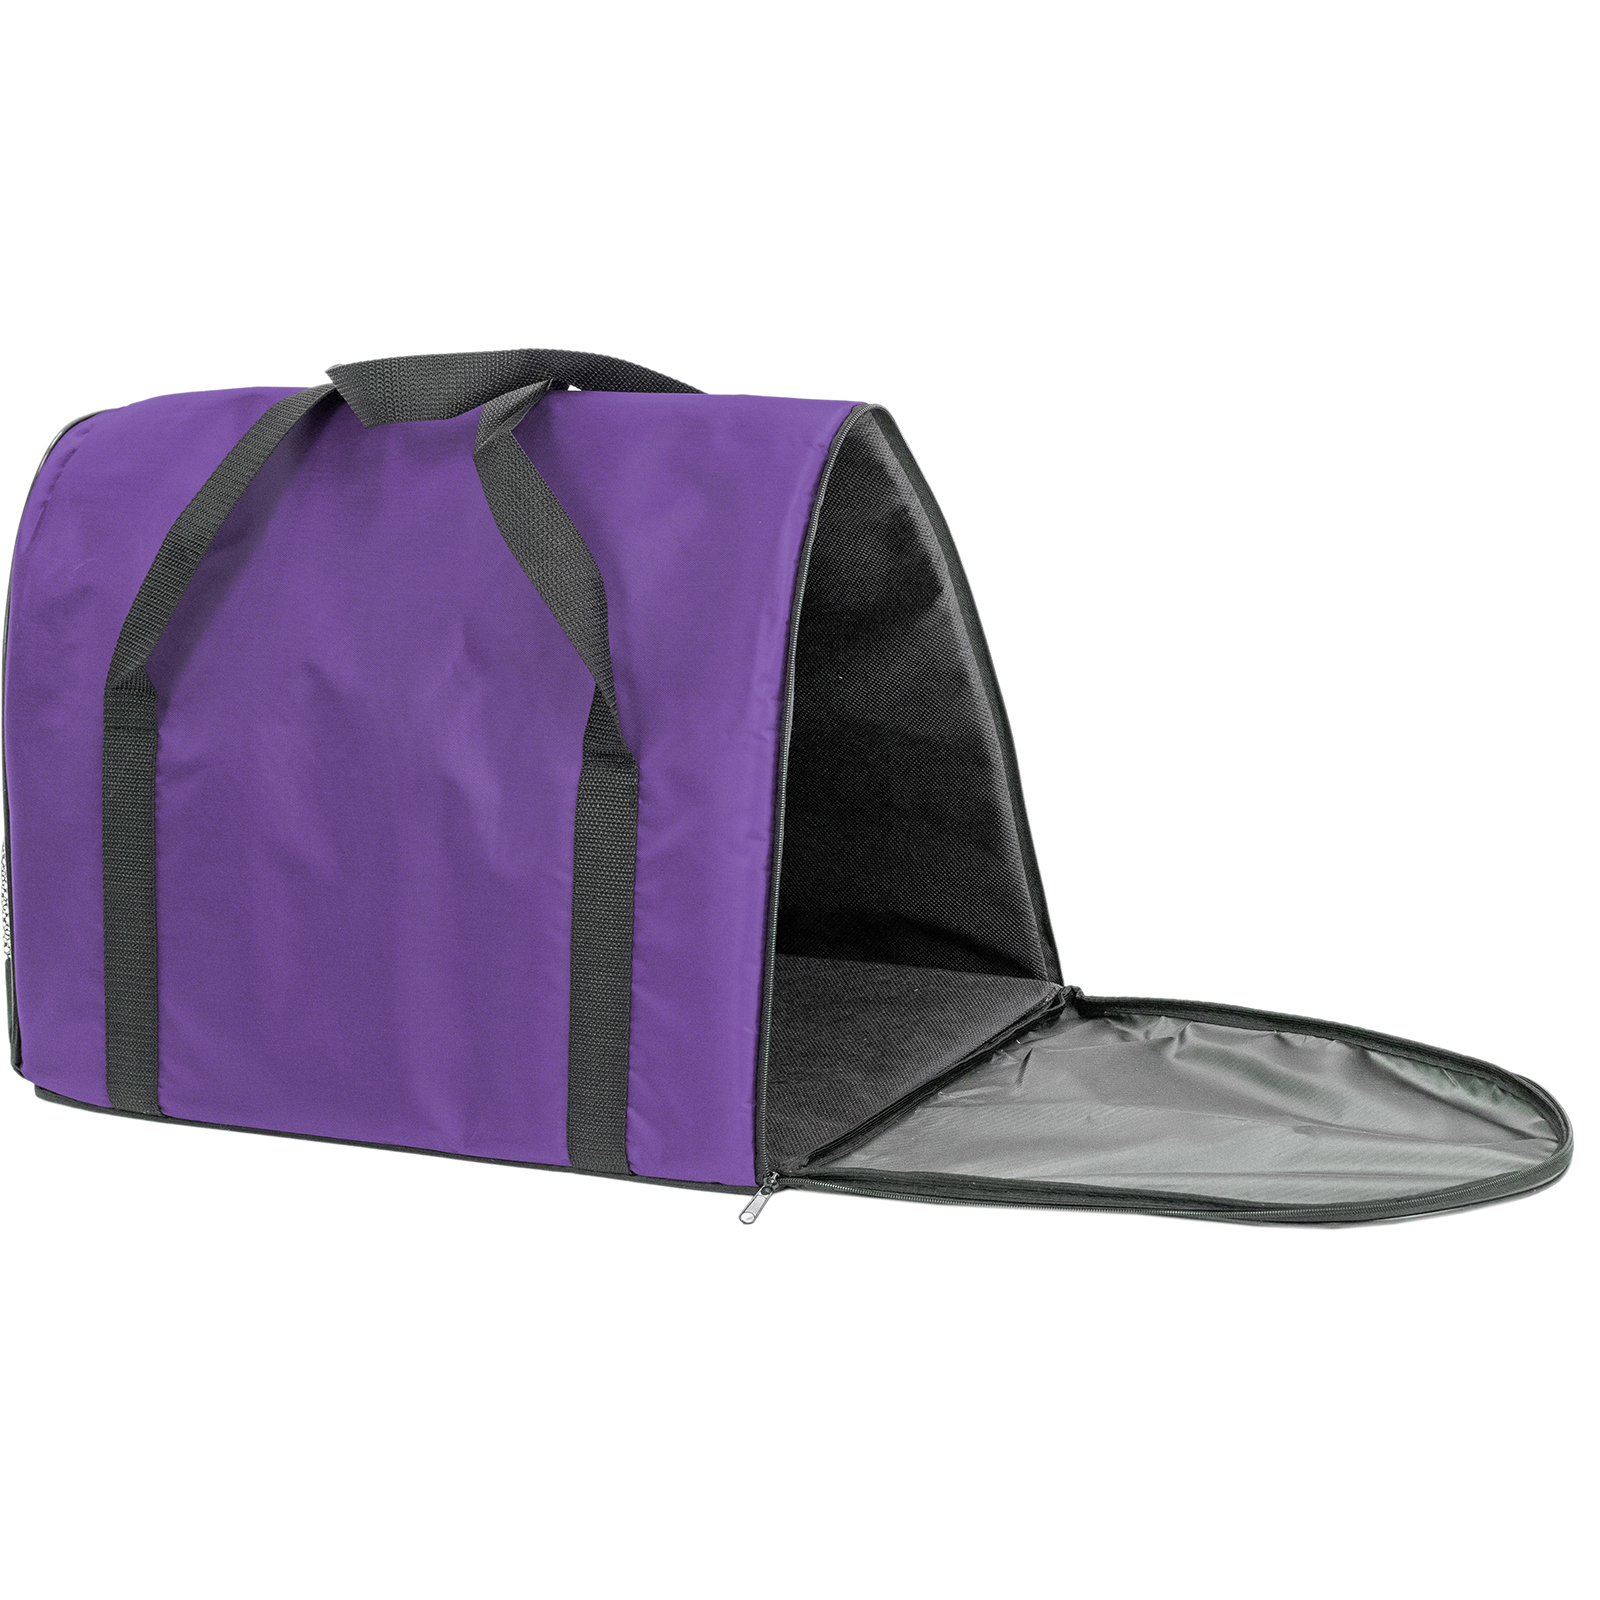 фото Переноска сумка арка pettails №3 44 х 27 х 31см, фиолетовая